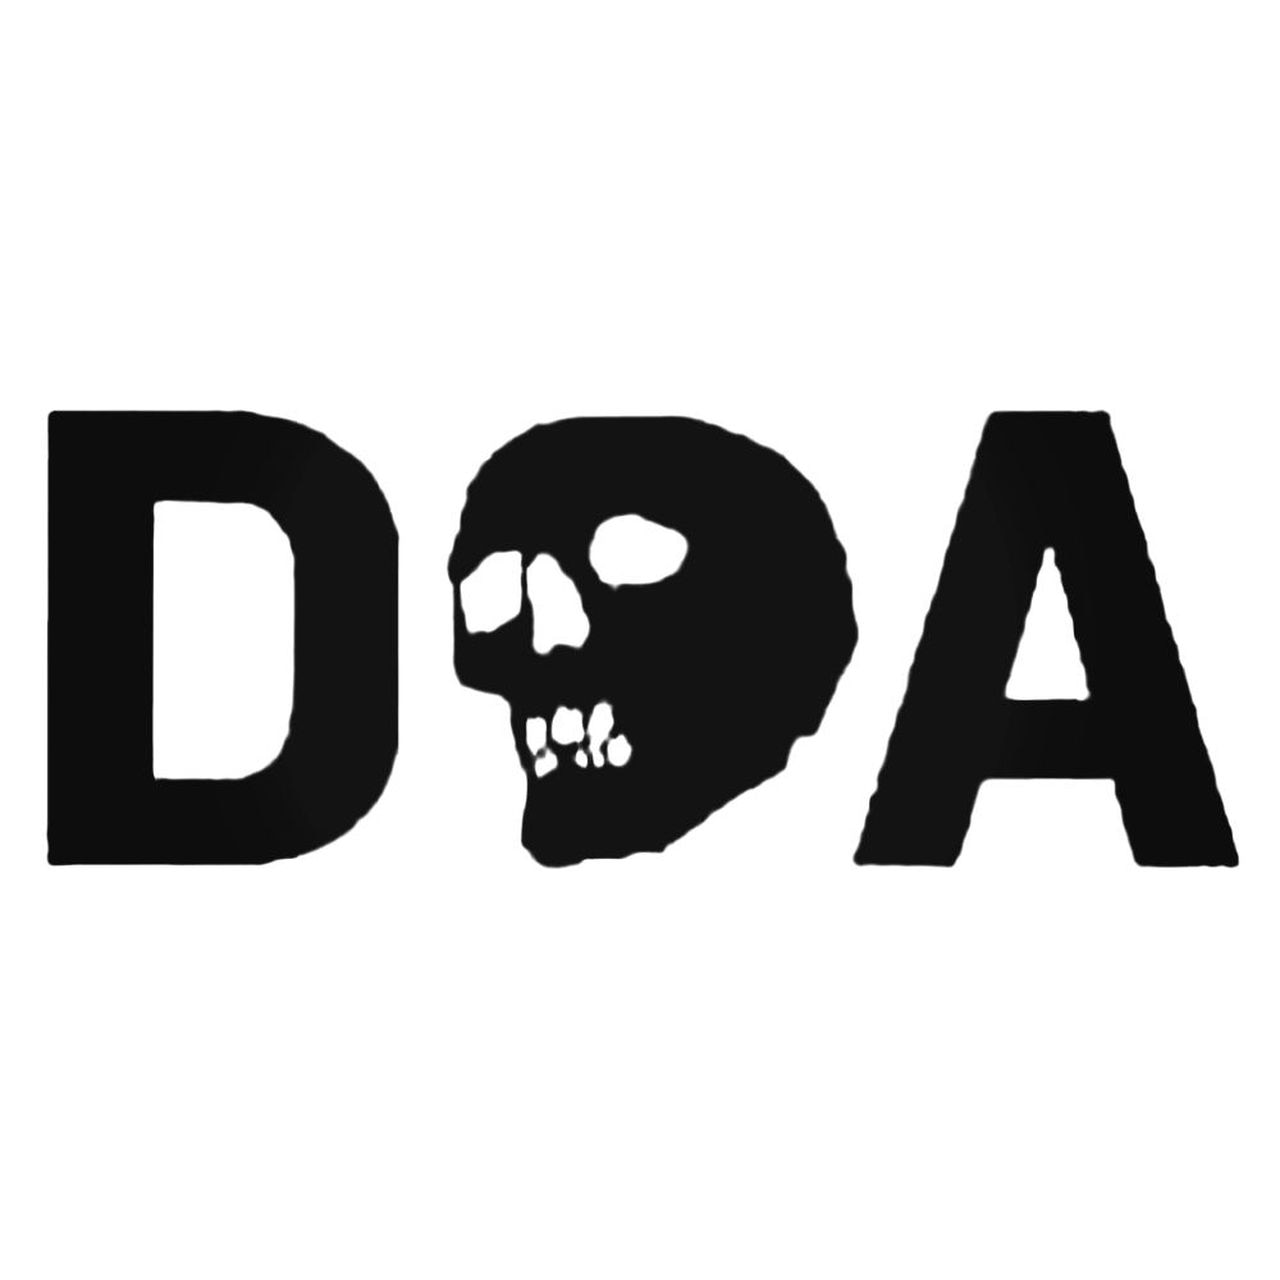 Doa Logo - Capita Doa Decal Sticker